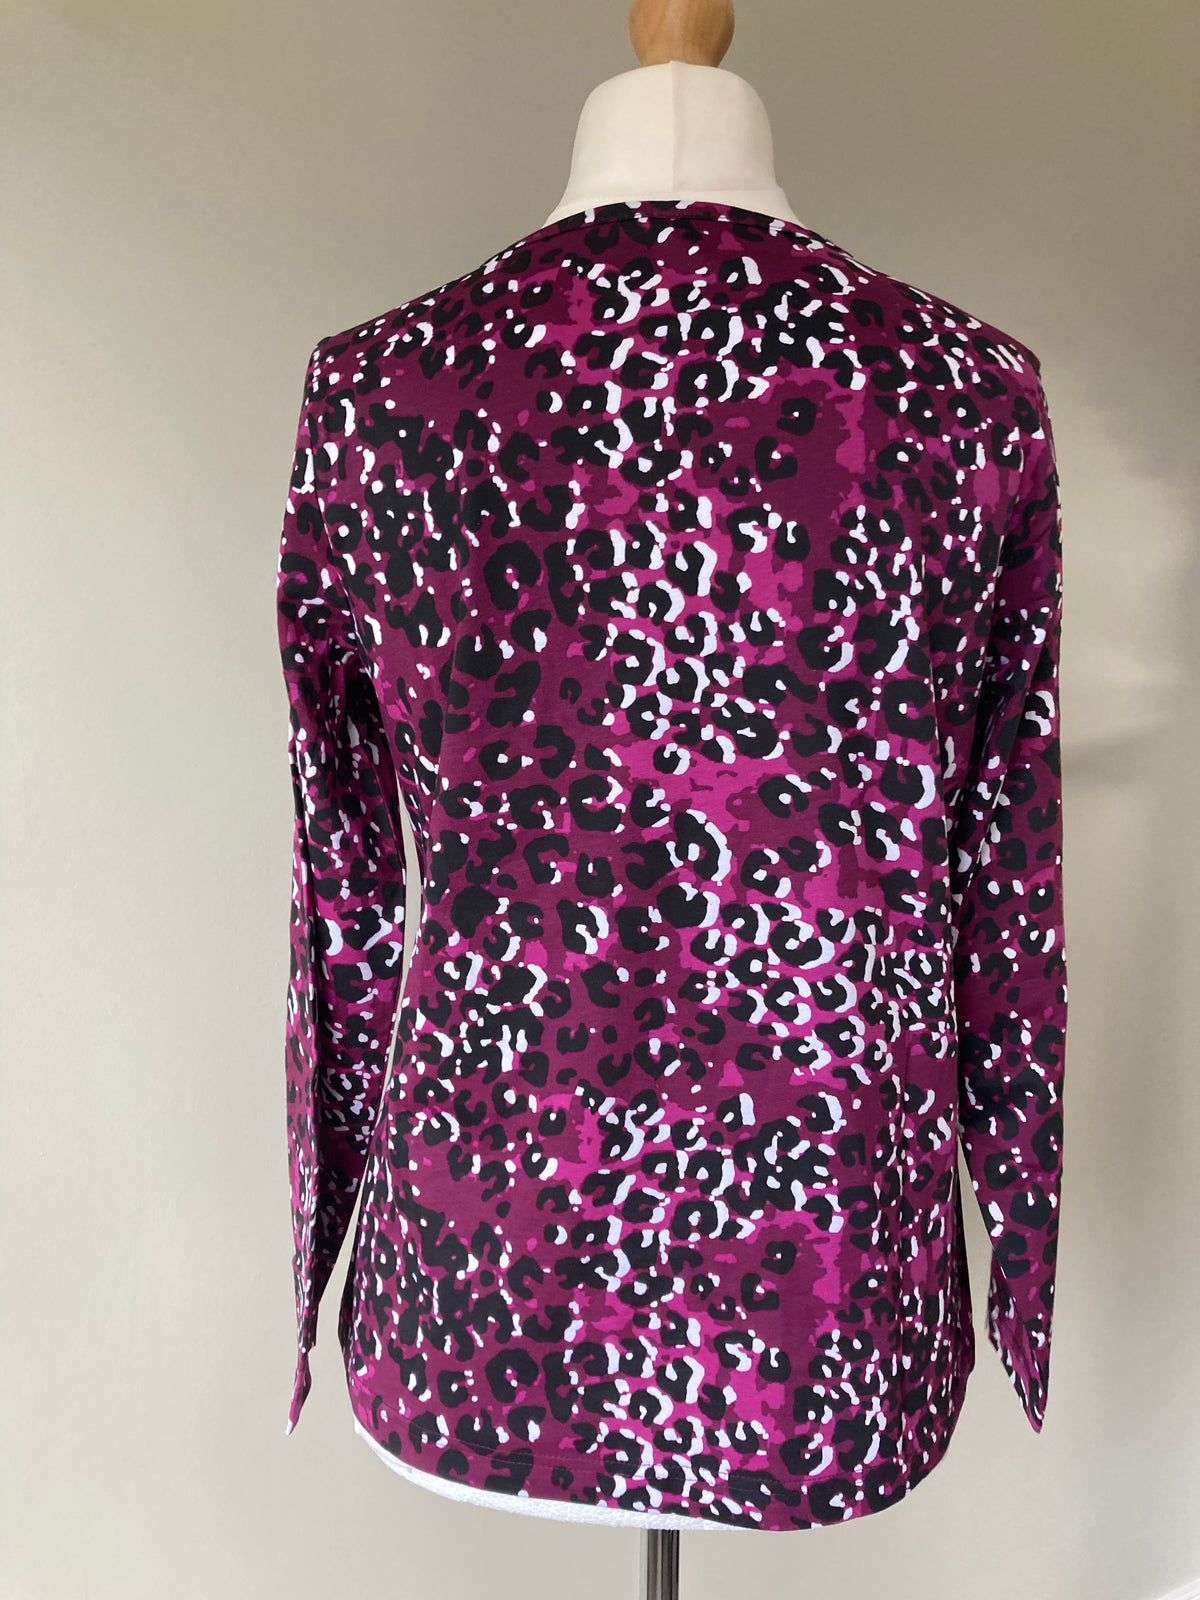 Purple Leopard Print Top by BPC - Size 14